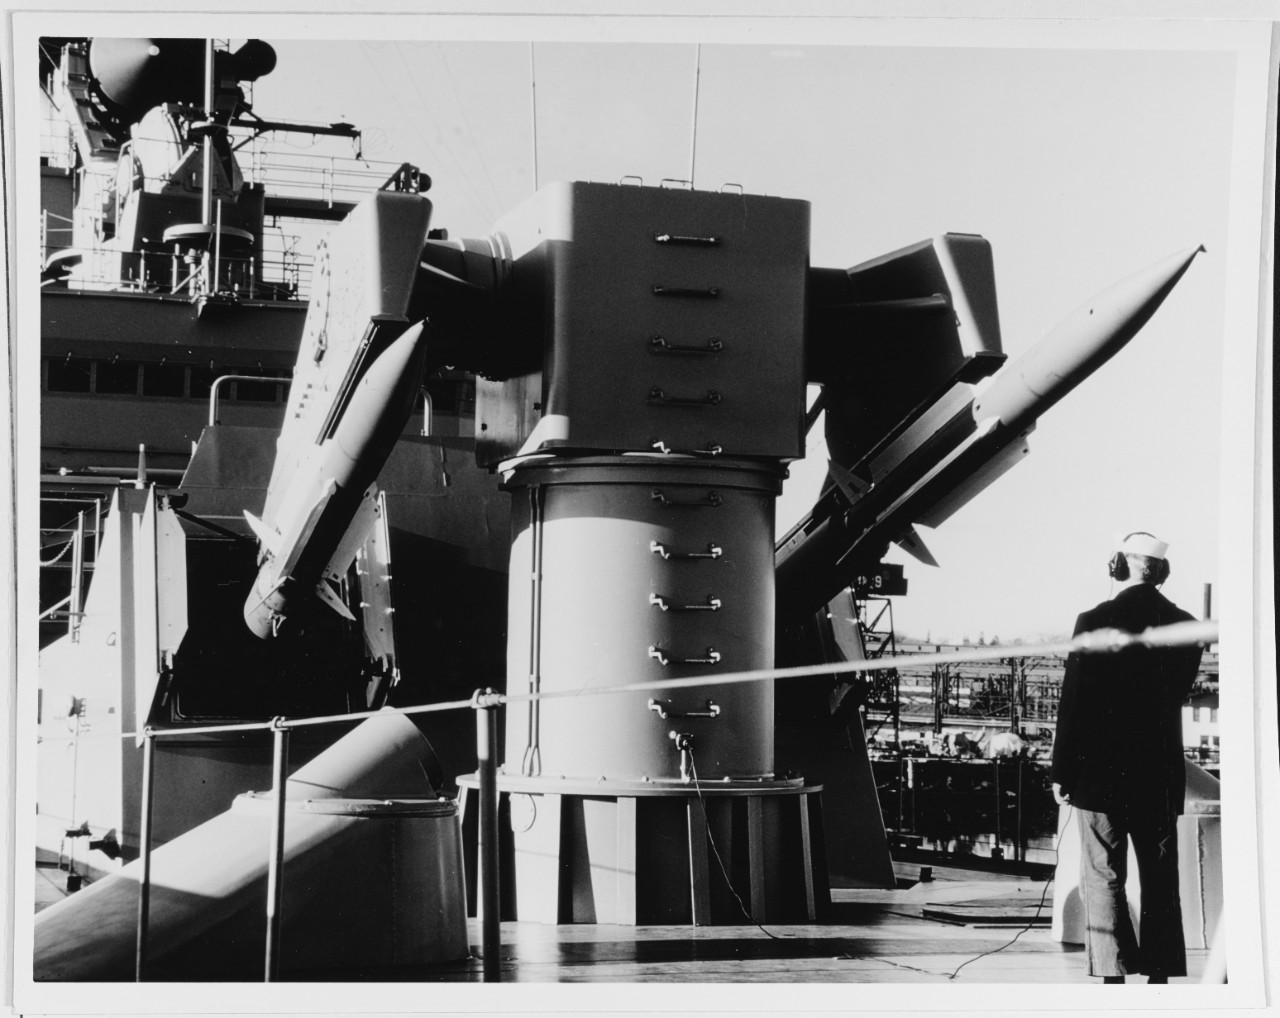 USS GRIDLEY (DLG-21)